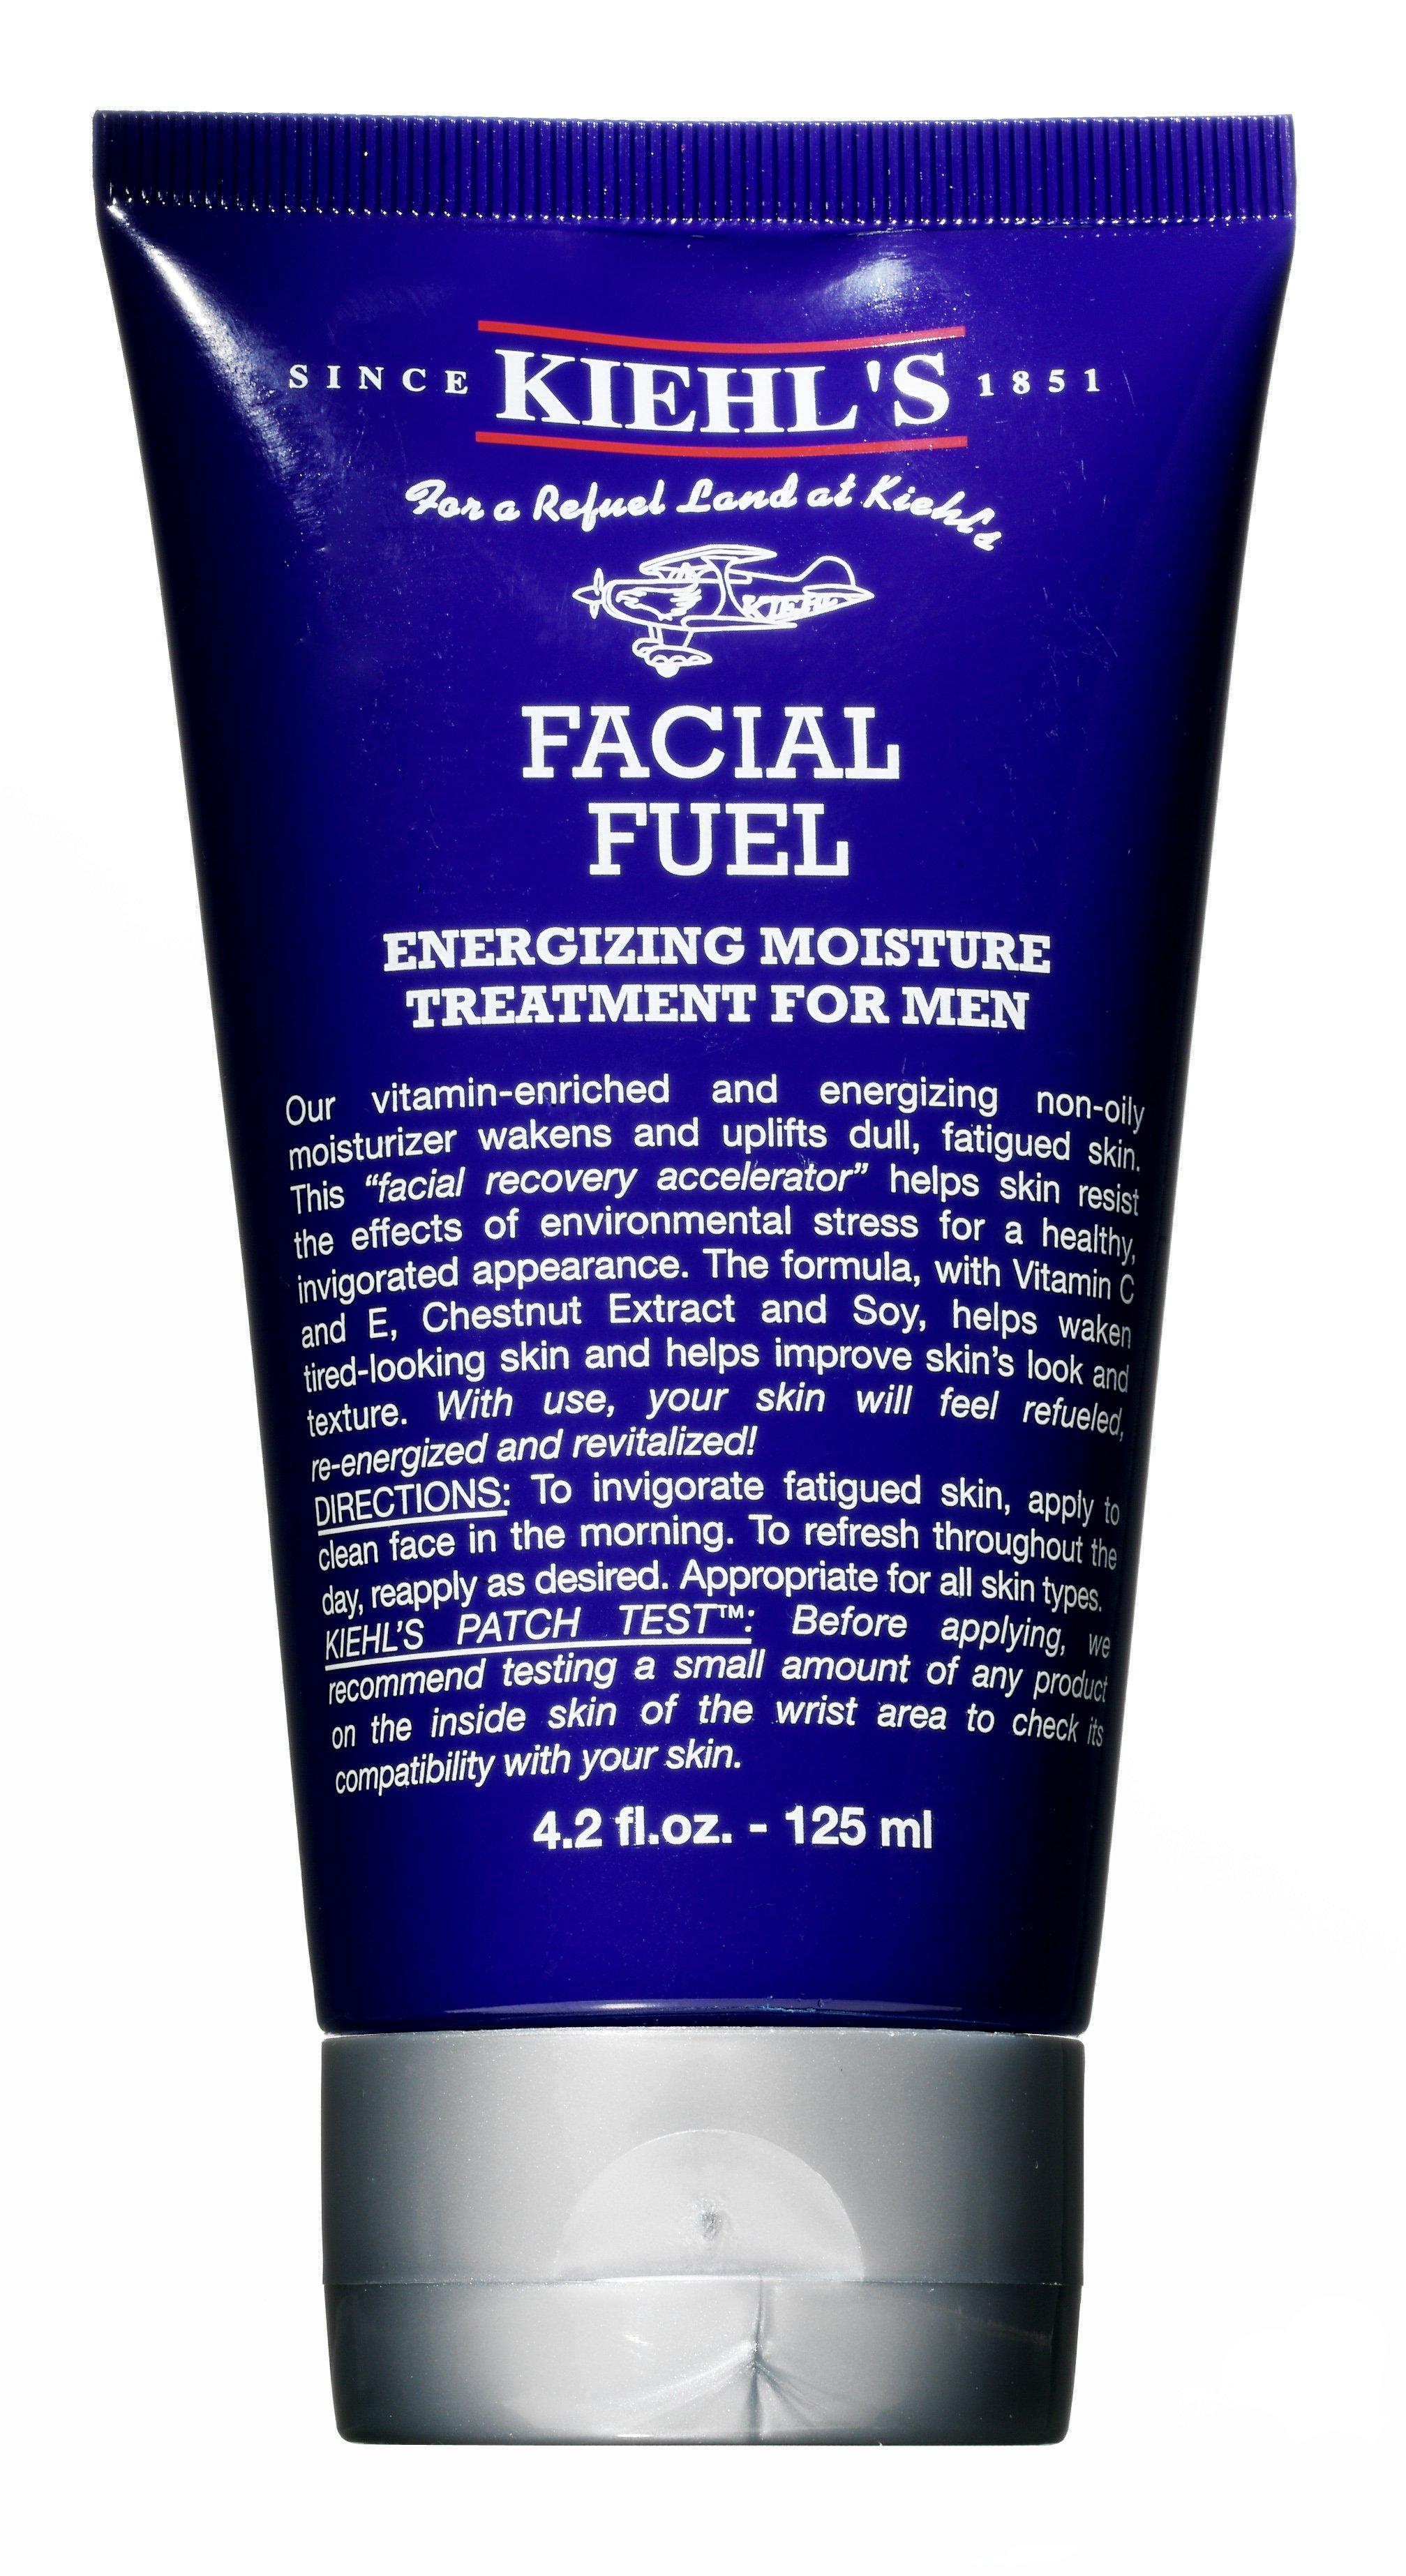 Image of Kiehl's Facial Facial Fuel Energizing Moisture Treatment for Men - 125ml